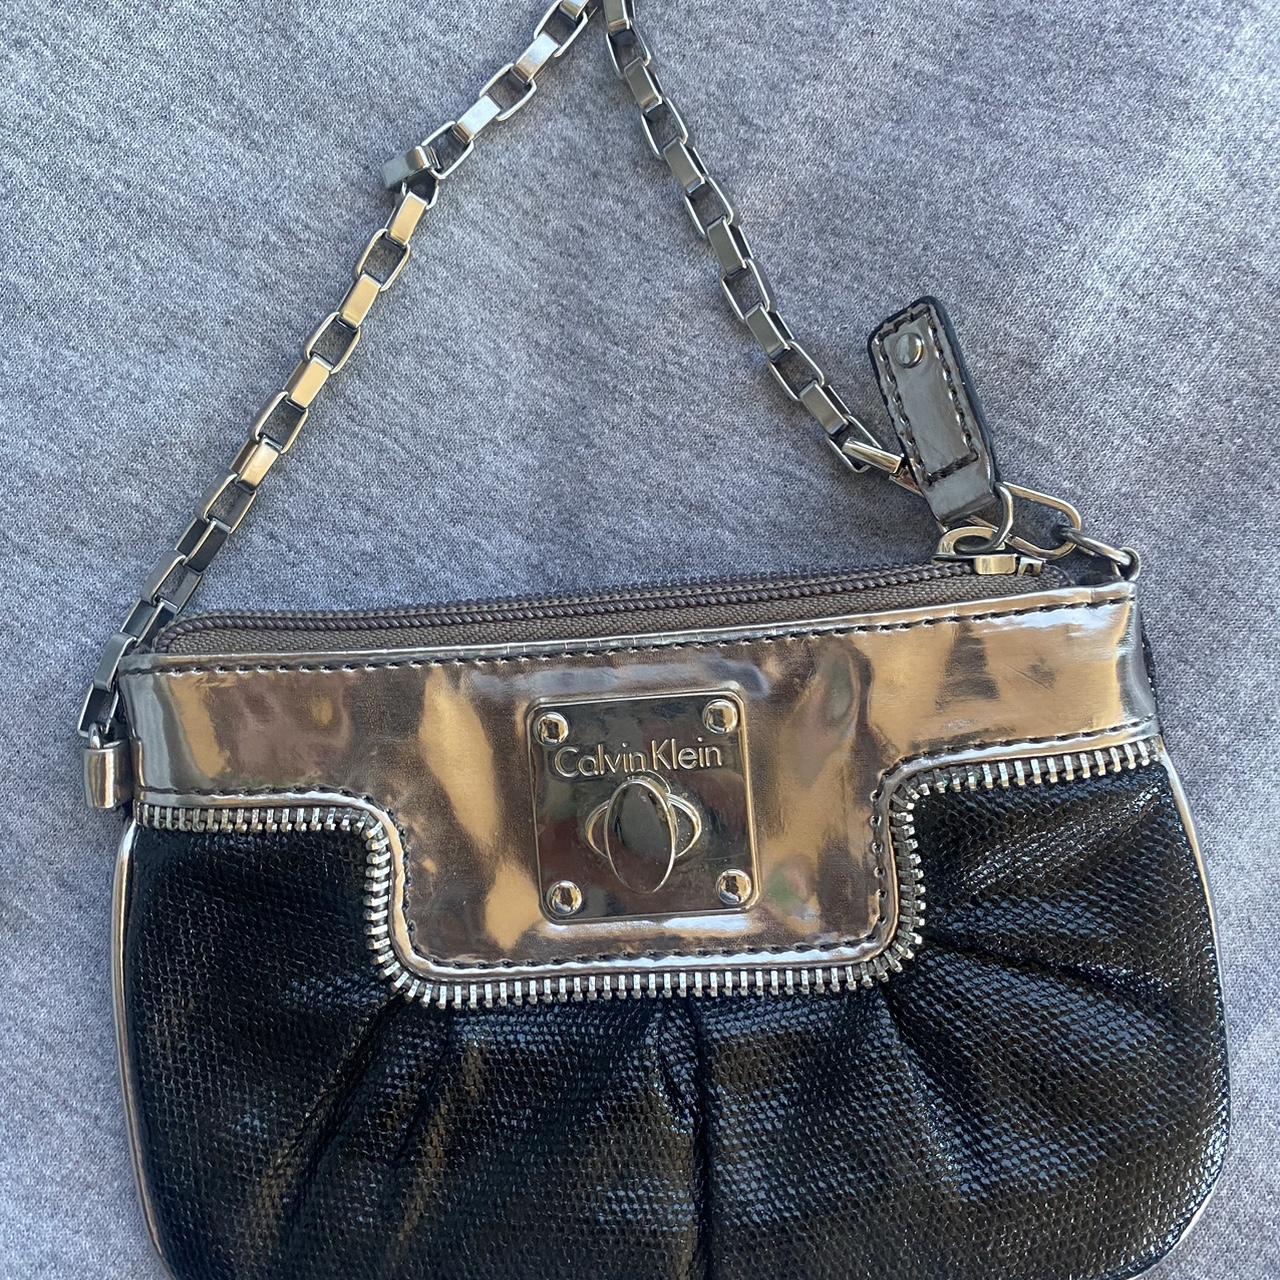 CALVIN KLEIN Black Leather Purse Bag-near MINT VINTAGE!!! | eBay